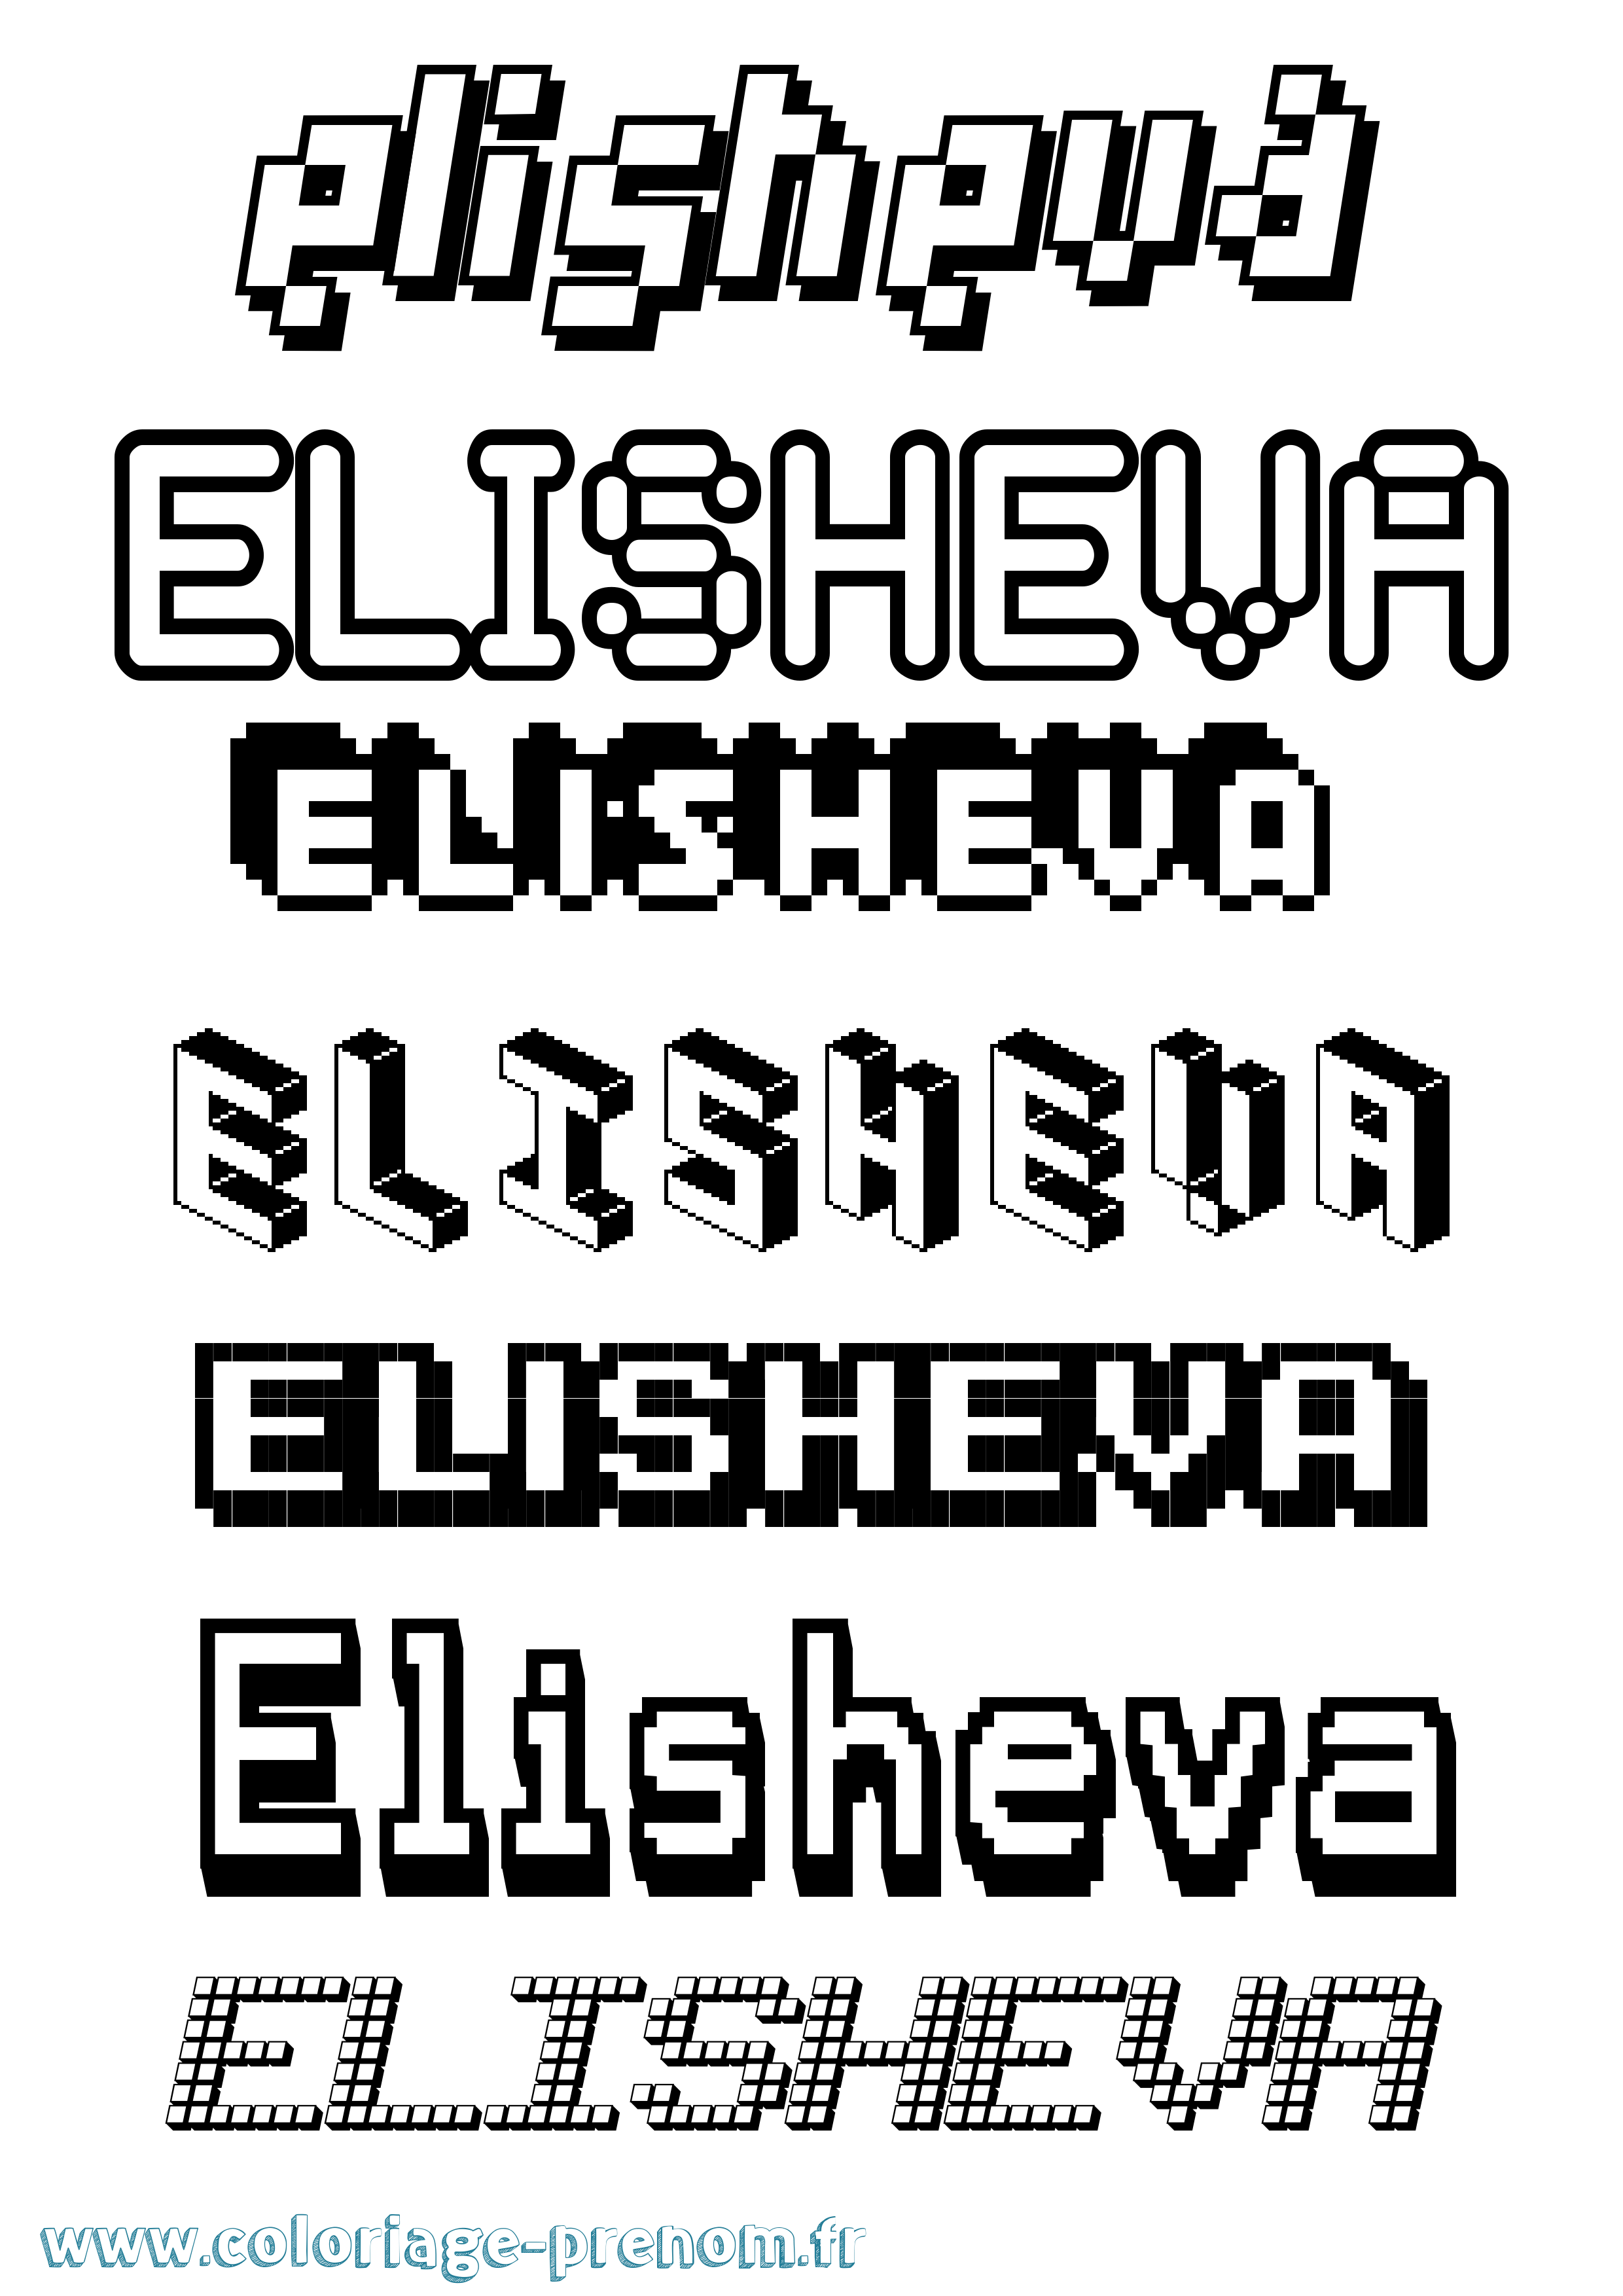 Coloriage prénom Elisheva Pixel